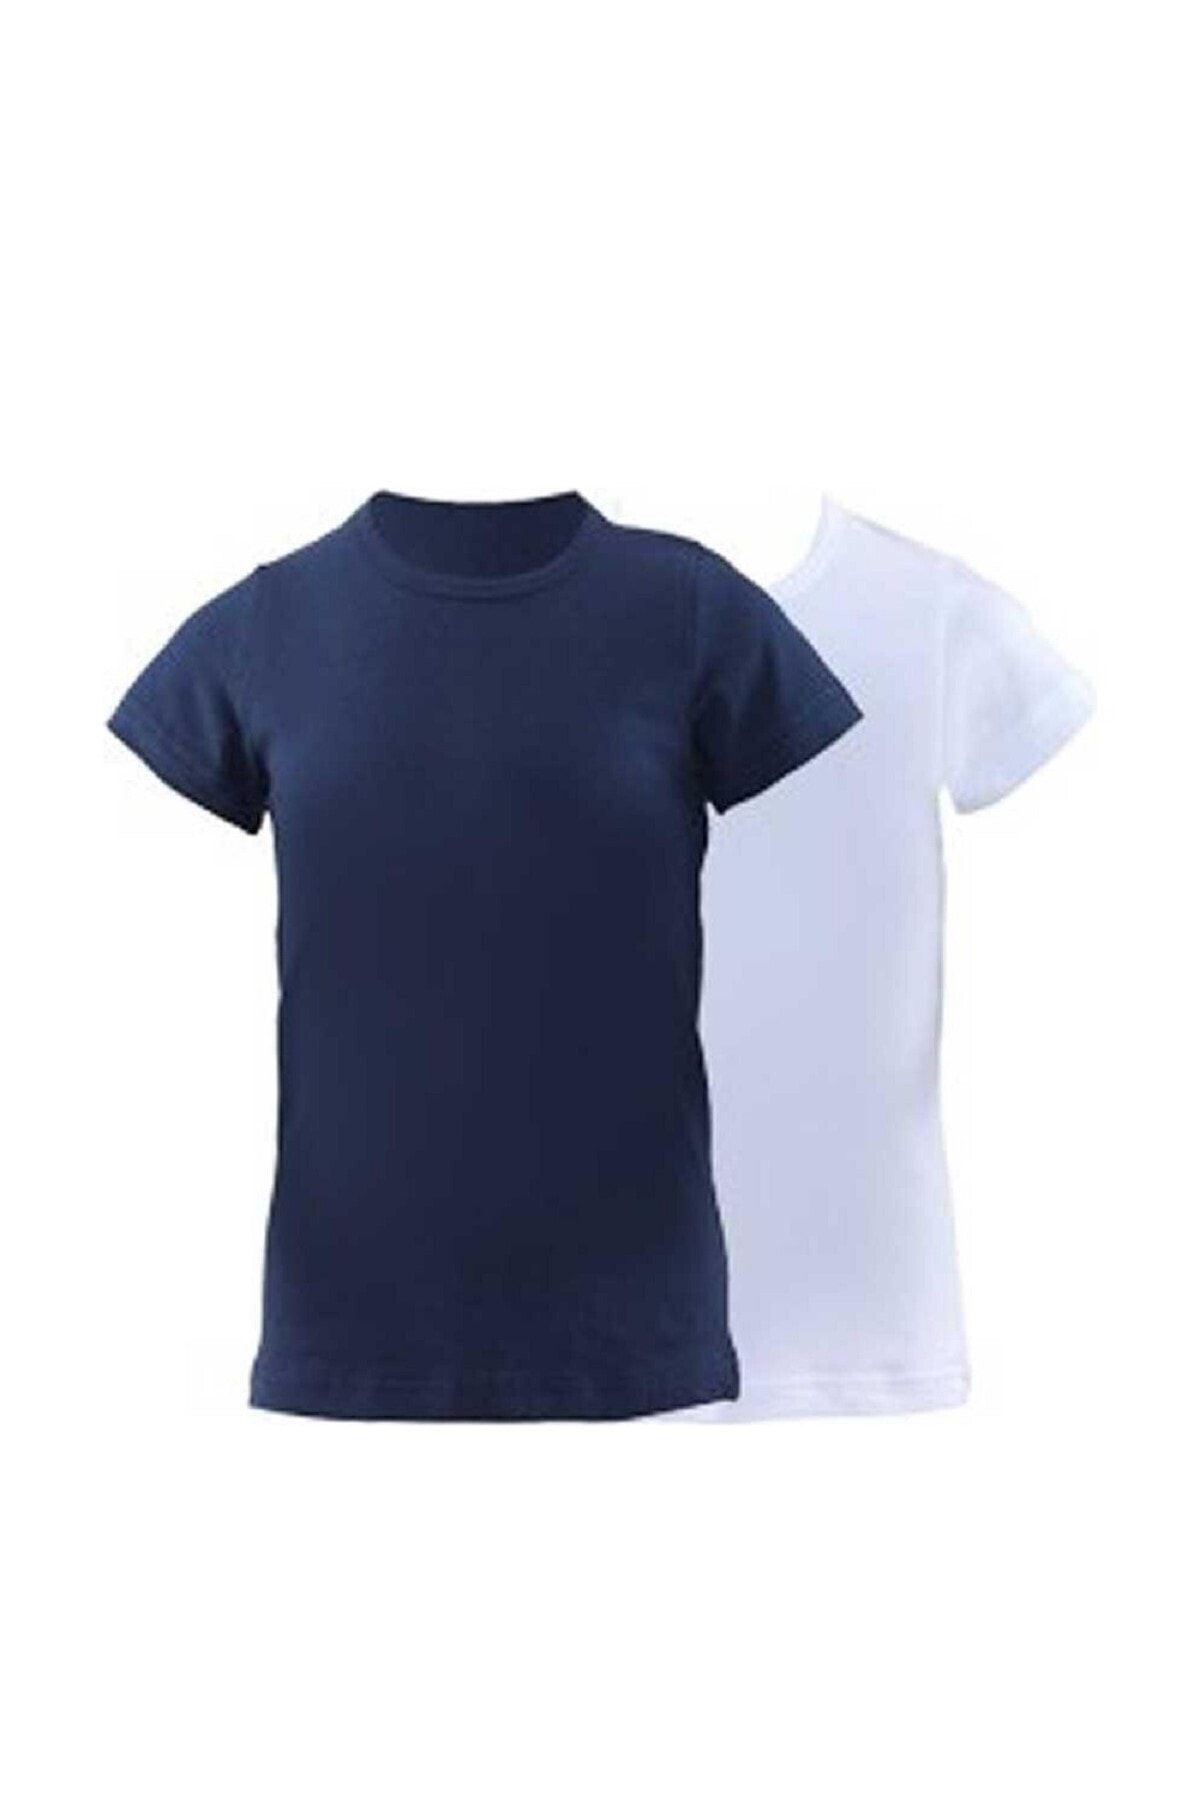 Blackspade Erkek Çocuk Lacivert-beyaz 2'li Paket Fanila T-shirt